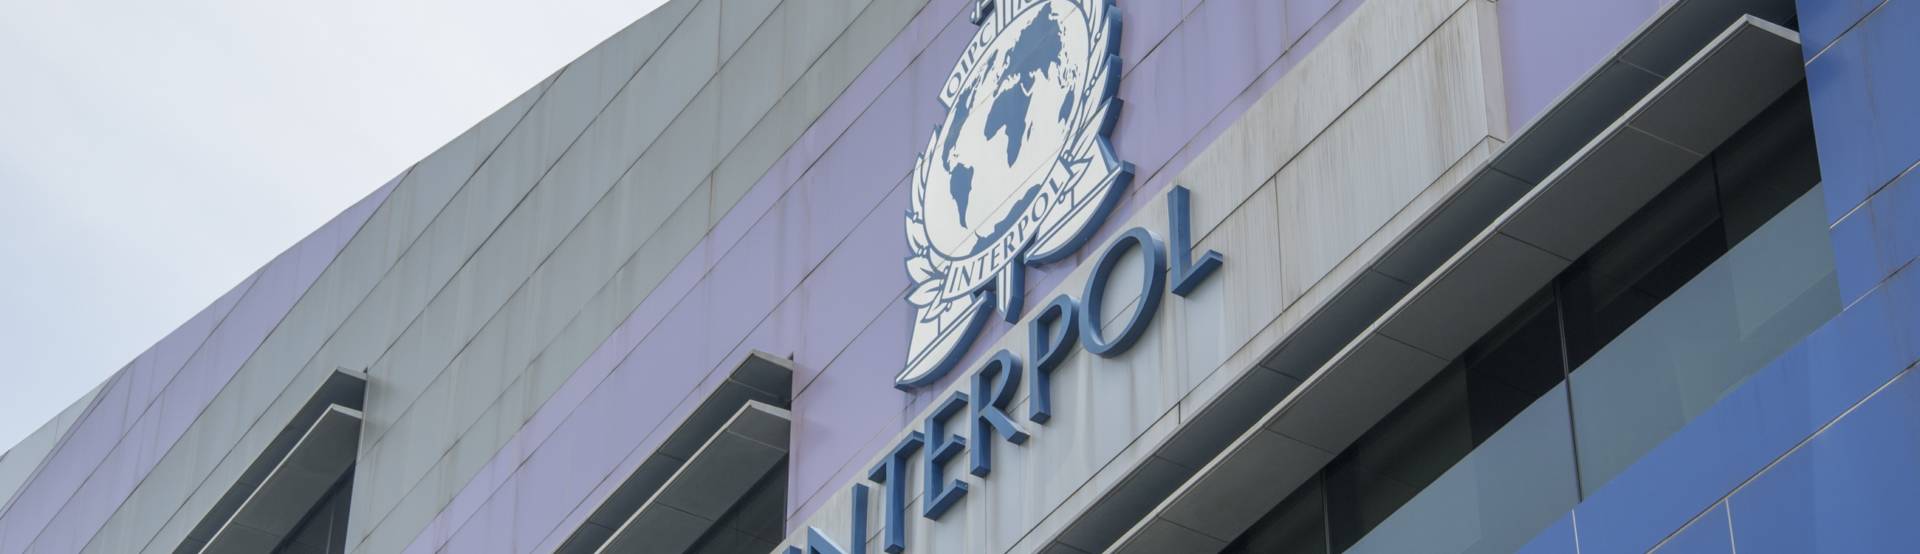 Metacrimine, l’Interpol indaga sull’ascesa dei crimini nel metaverso